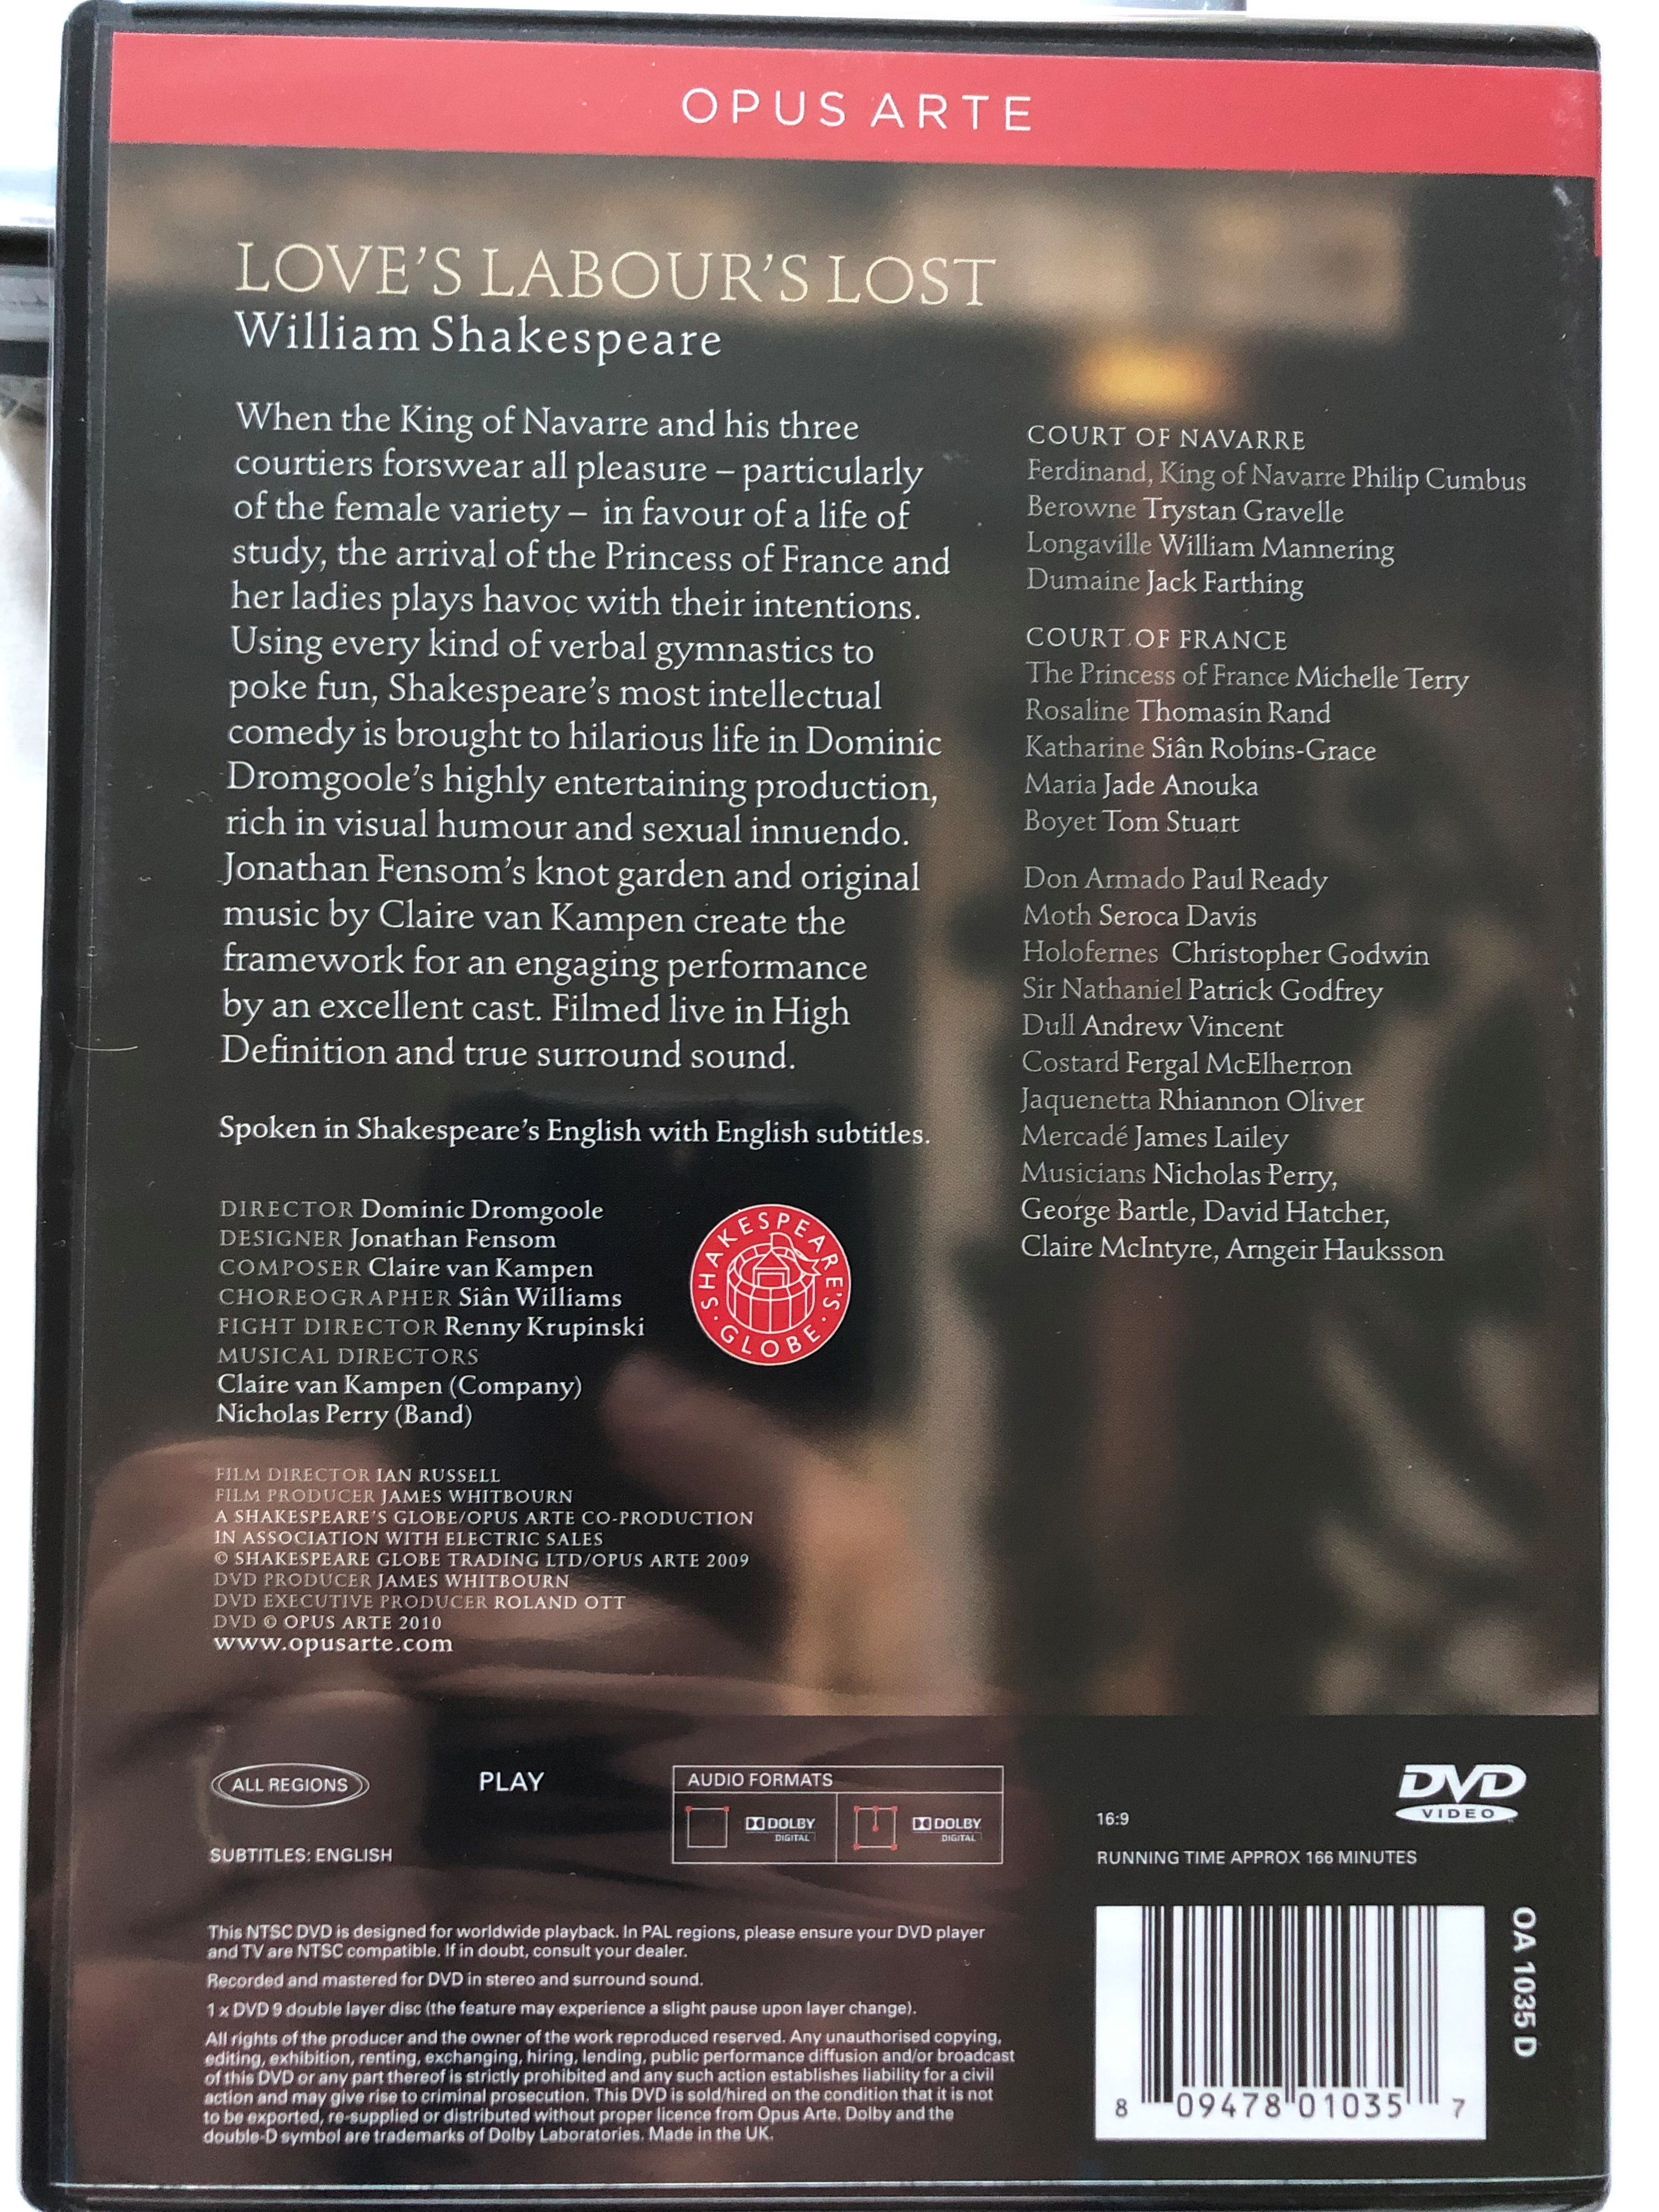 william-shakespeare-love-s-labour-s-lost-dvd-2010-opus-arte-play-directed-by-dominic-dromgoole-film-director-ian-russel-main-roles-jade-anouka-gemma-arterton-philip-cumbus-filmed-live-at-shakespeare-s-globe-london-.jpg